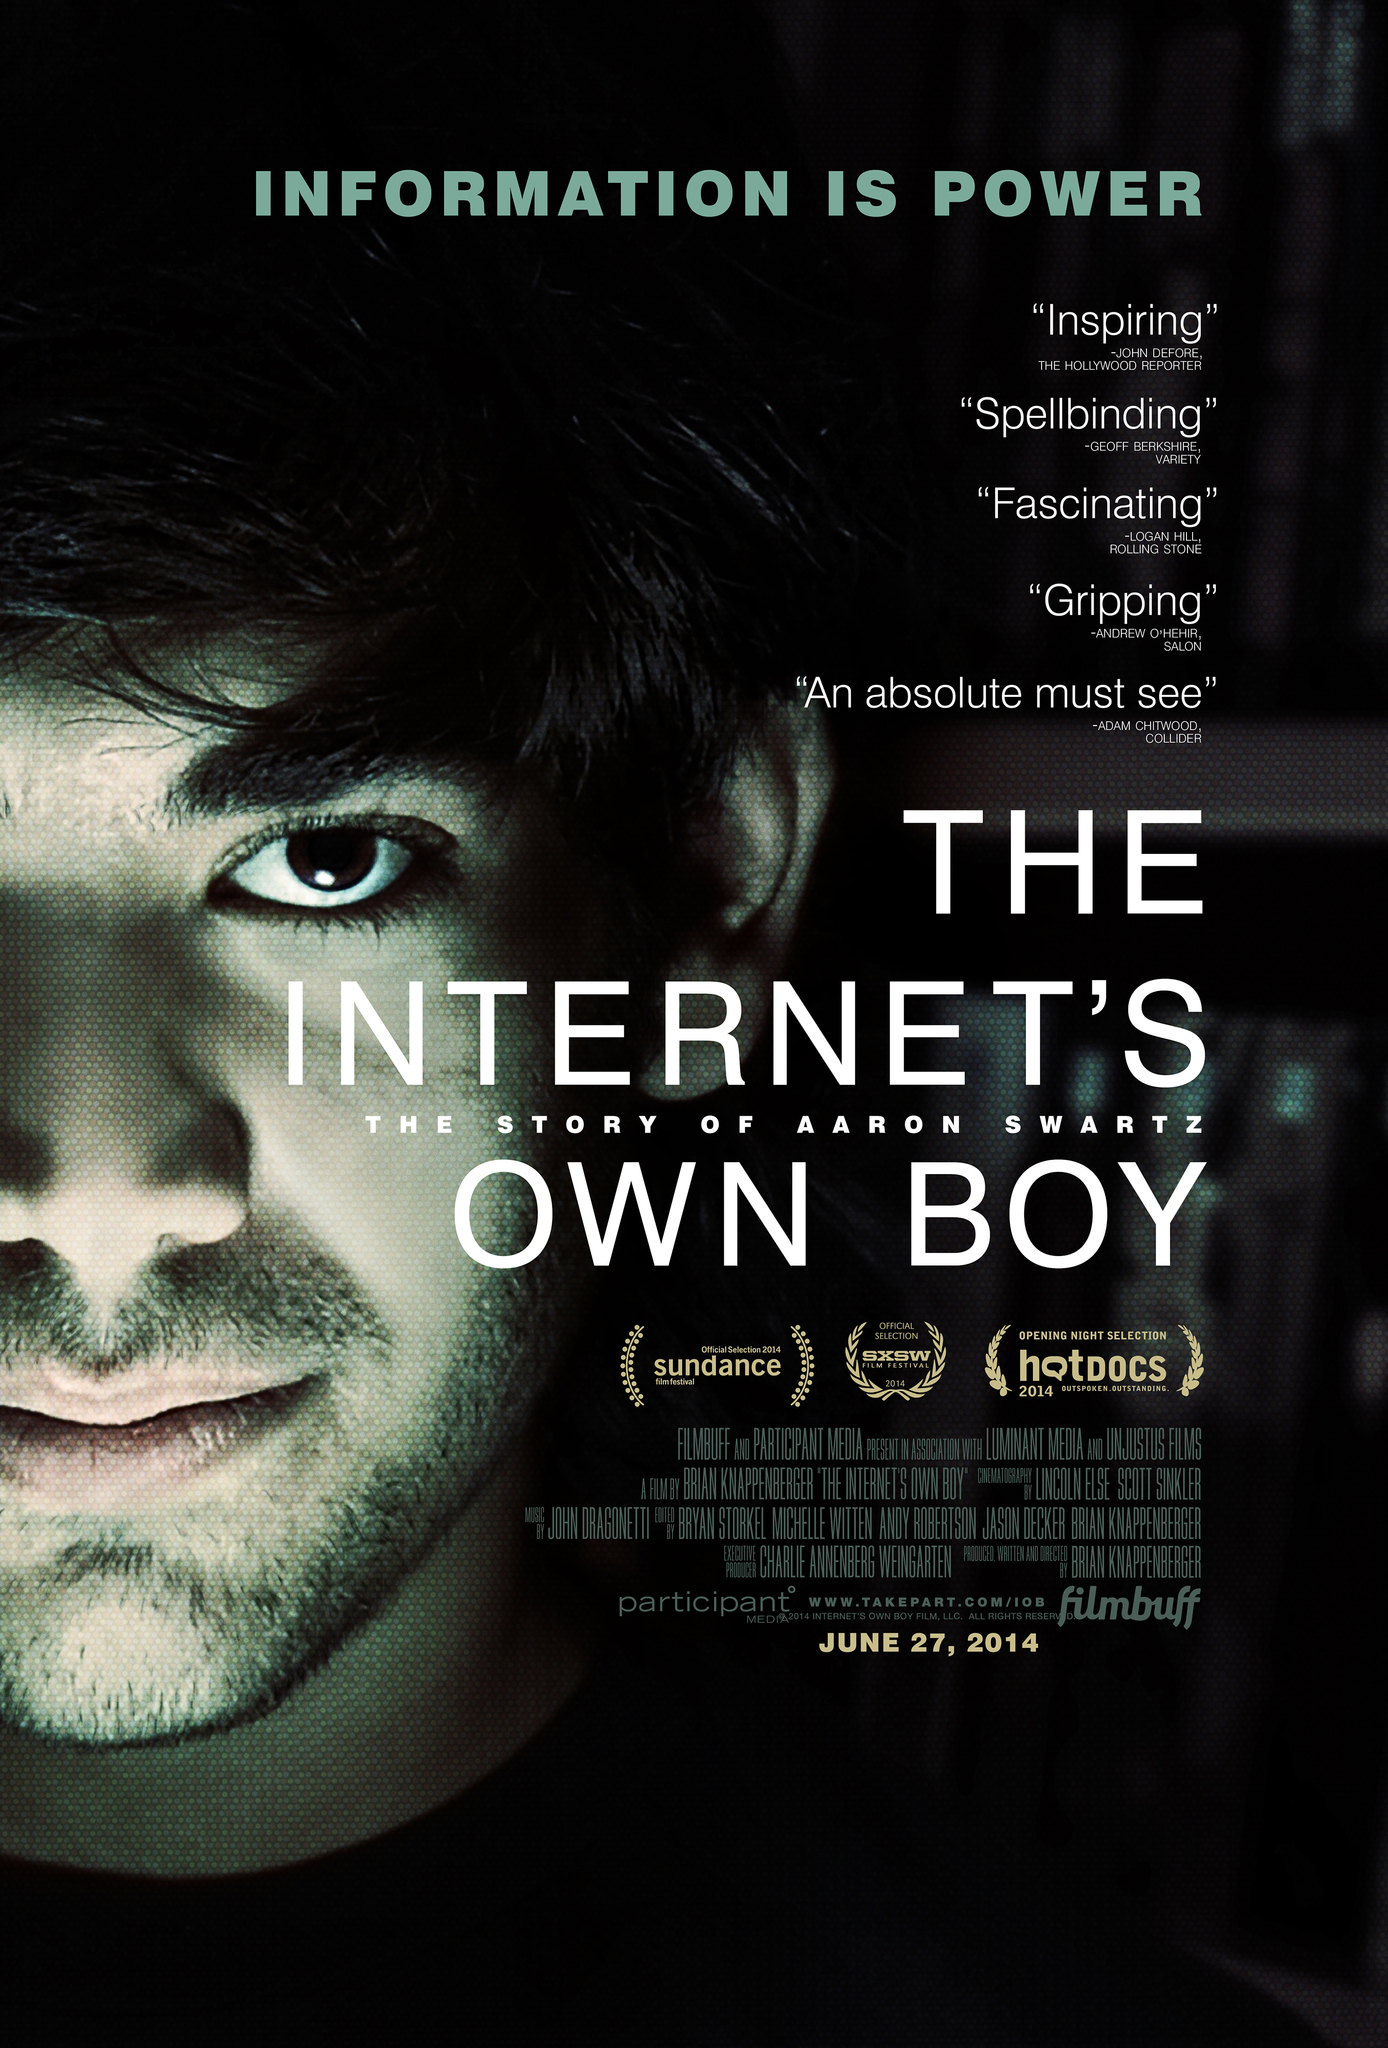 Nonton film The Internets Own Boy The Story of Aaron Swartz layarkaca21 indoxx1 ganool online streaming terbaru